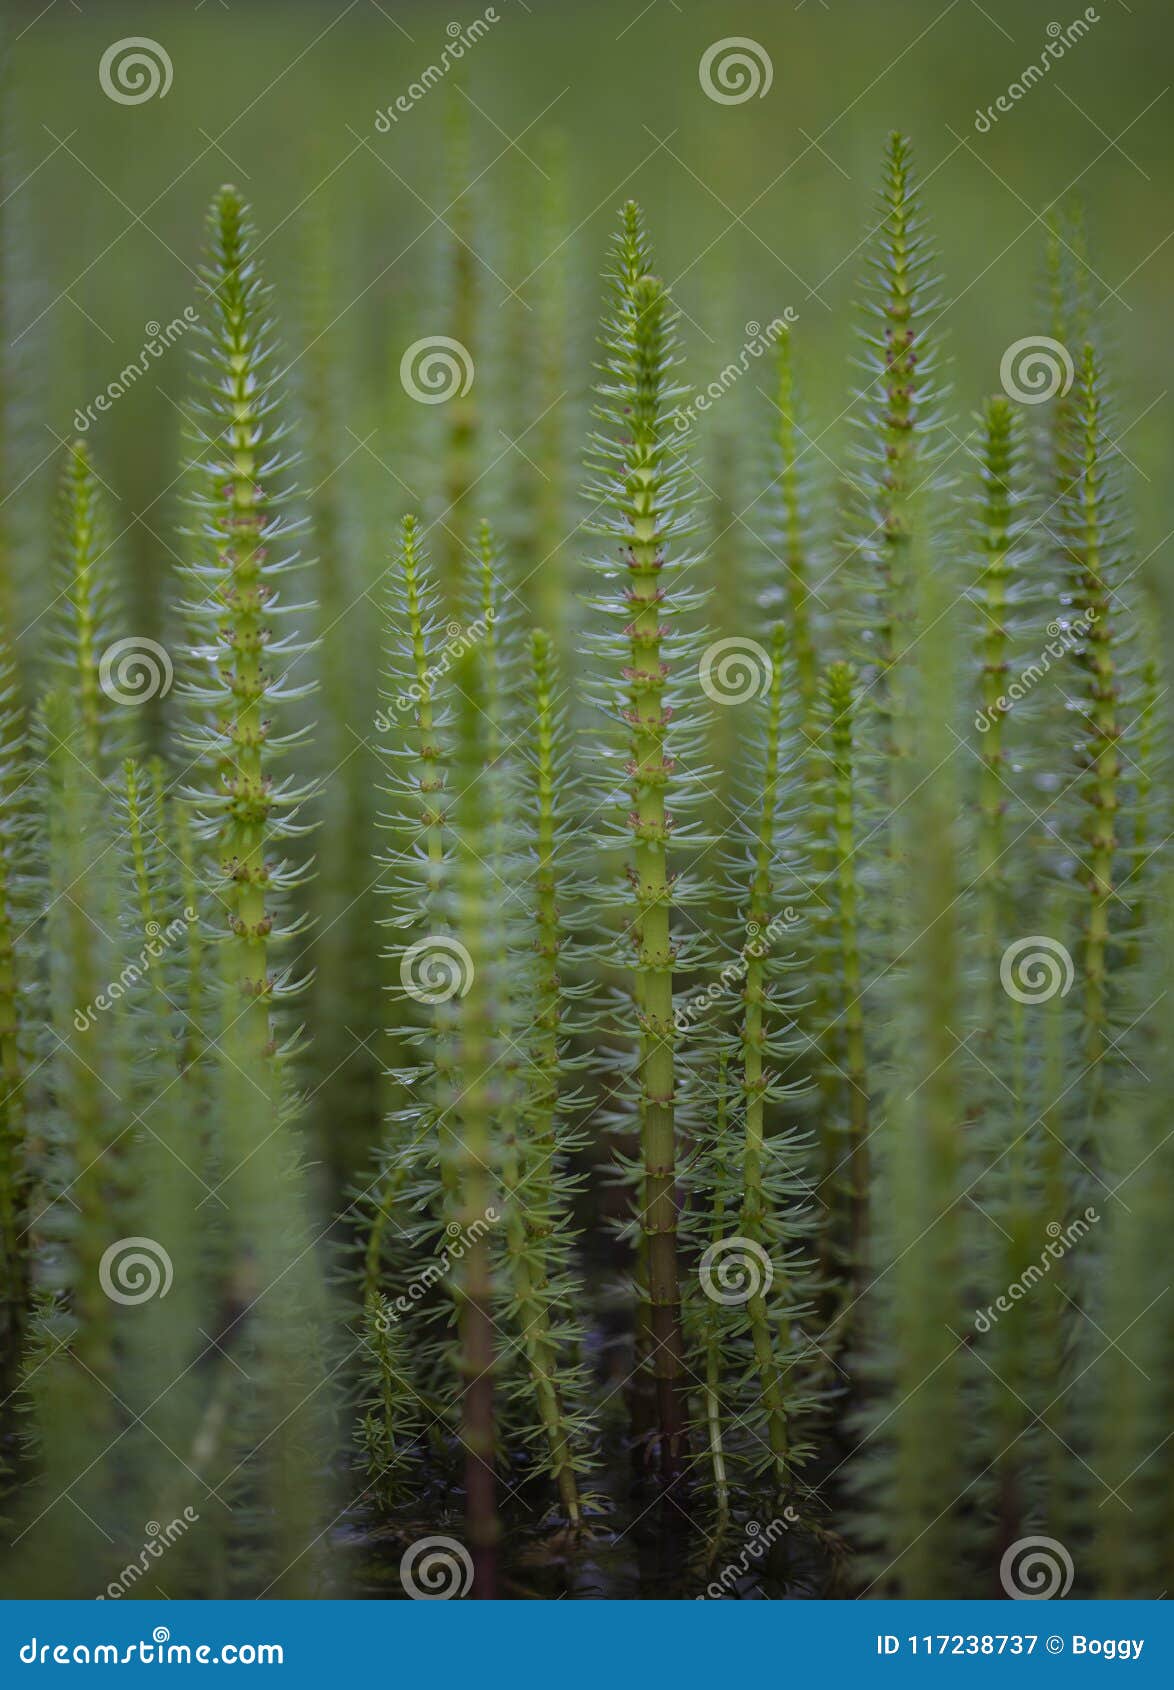 mare`s tail aquatic plant